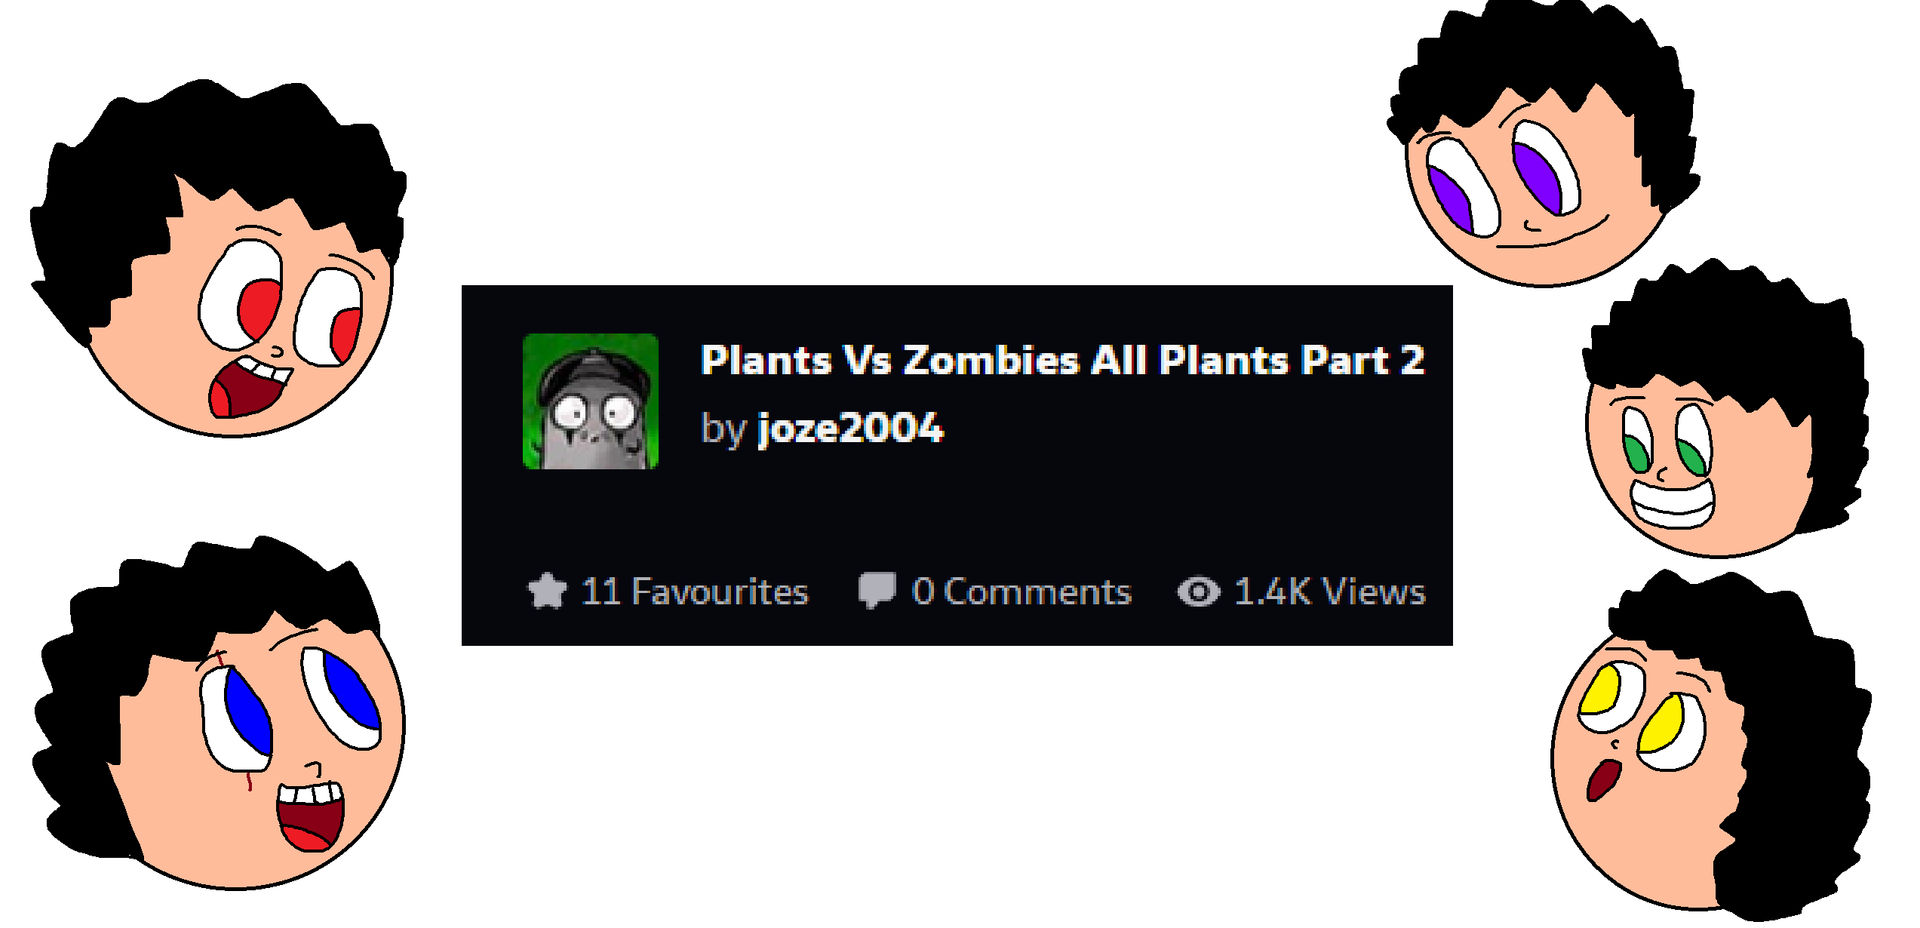 Plants Vs Zombies All Plants 3 by joze2004 on DeviantArt